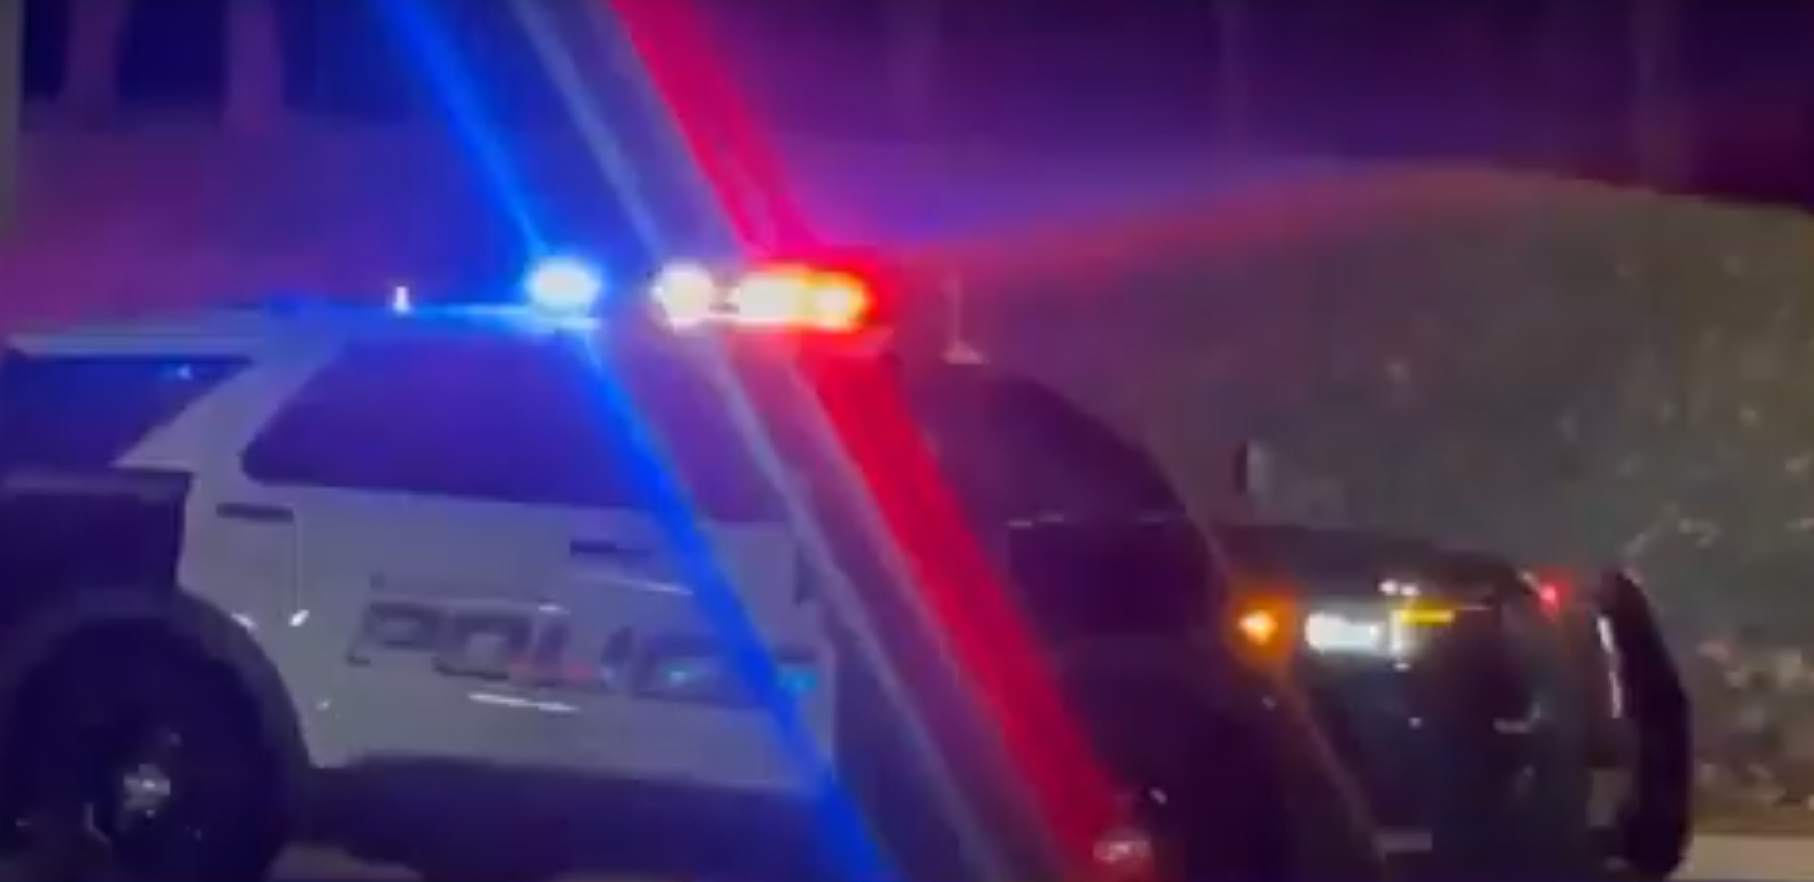 PUCANJAVA U AMERICI Jake policijske snage blokirale područje (VIDEO)